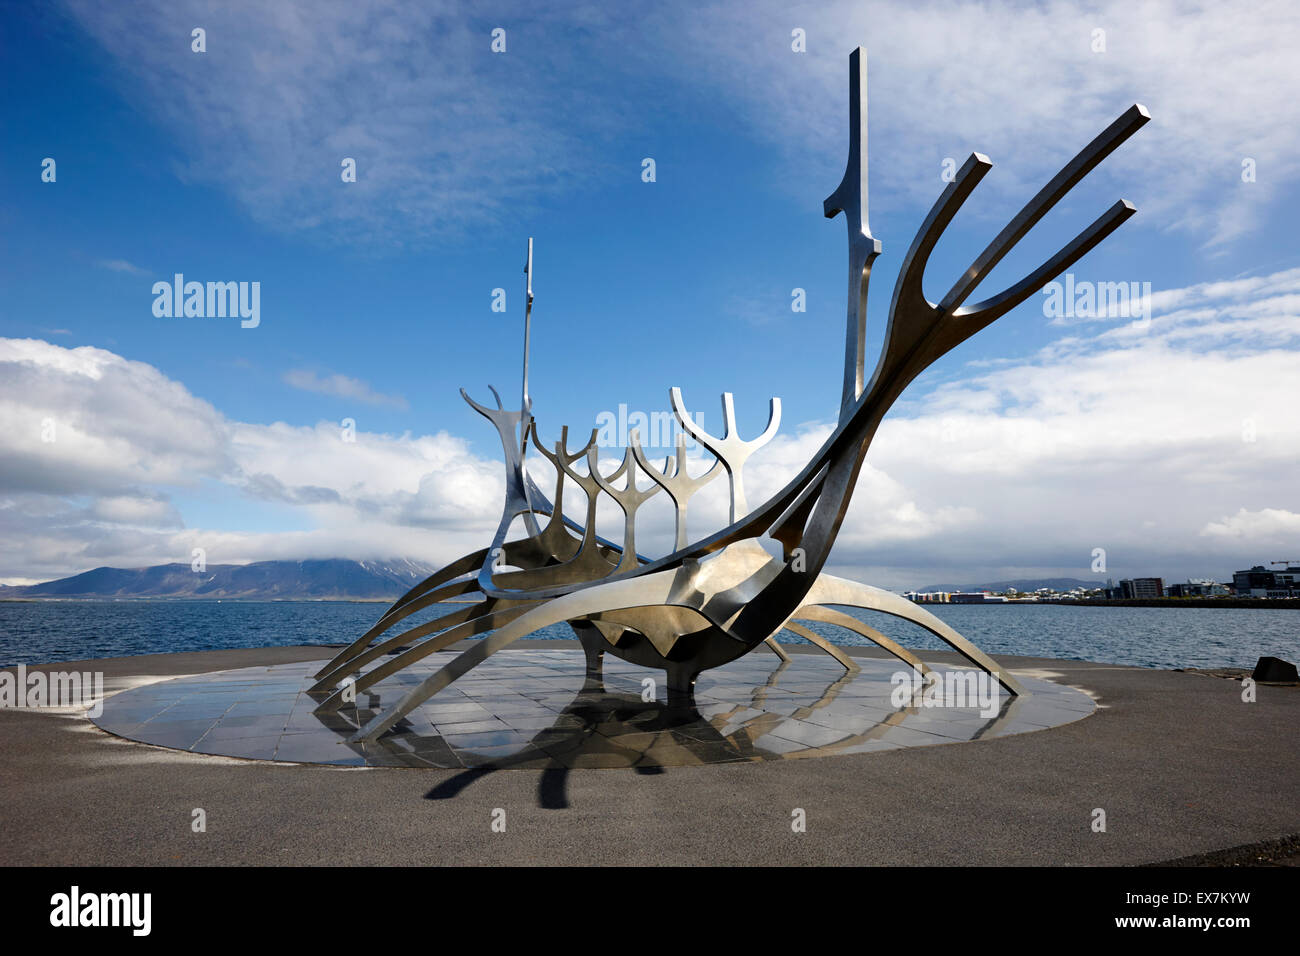 El sol solfarid voyager barco vikingo escultura en Reykjavik seafront Islandia Foto de stock